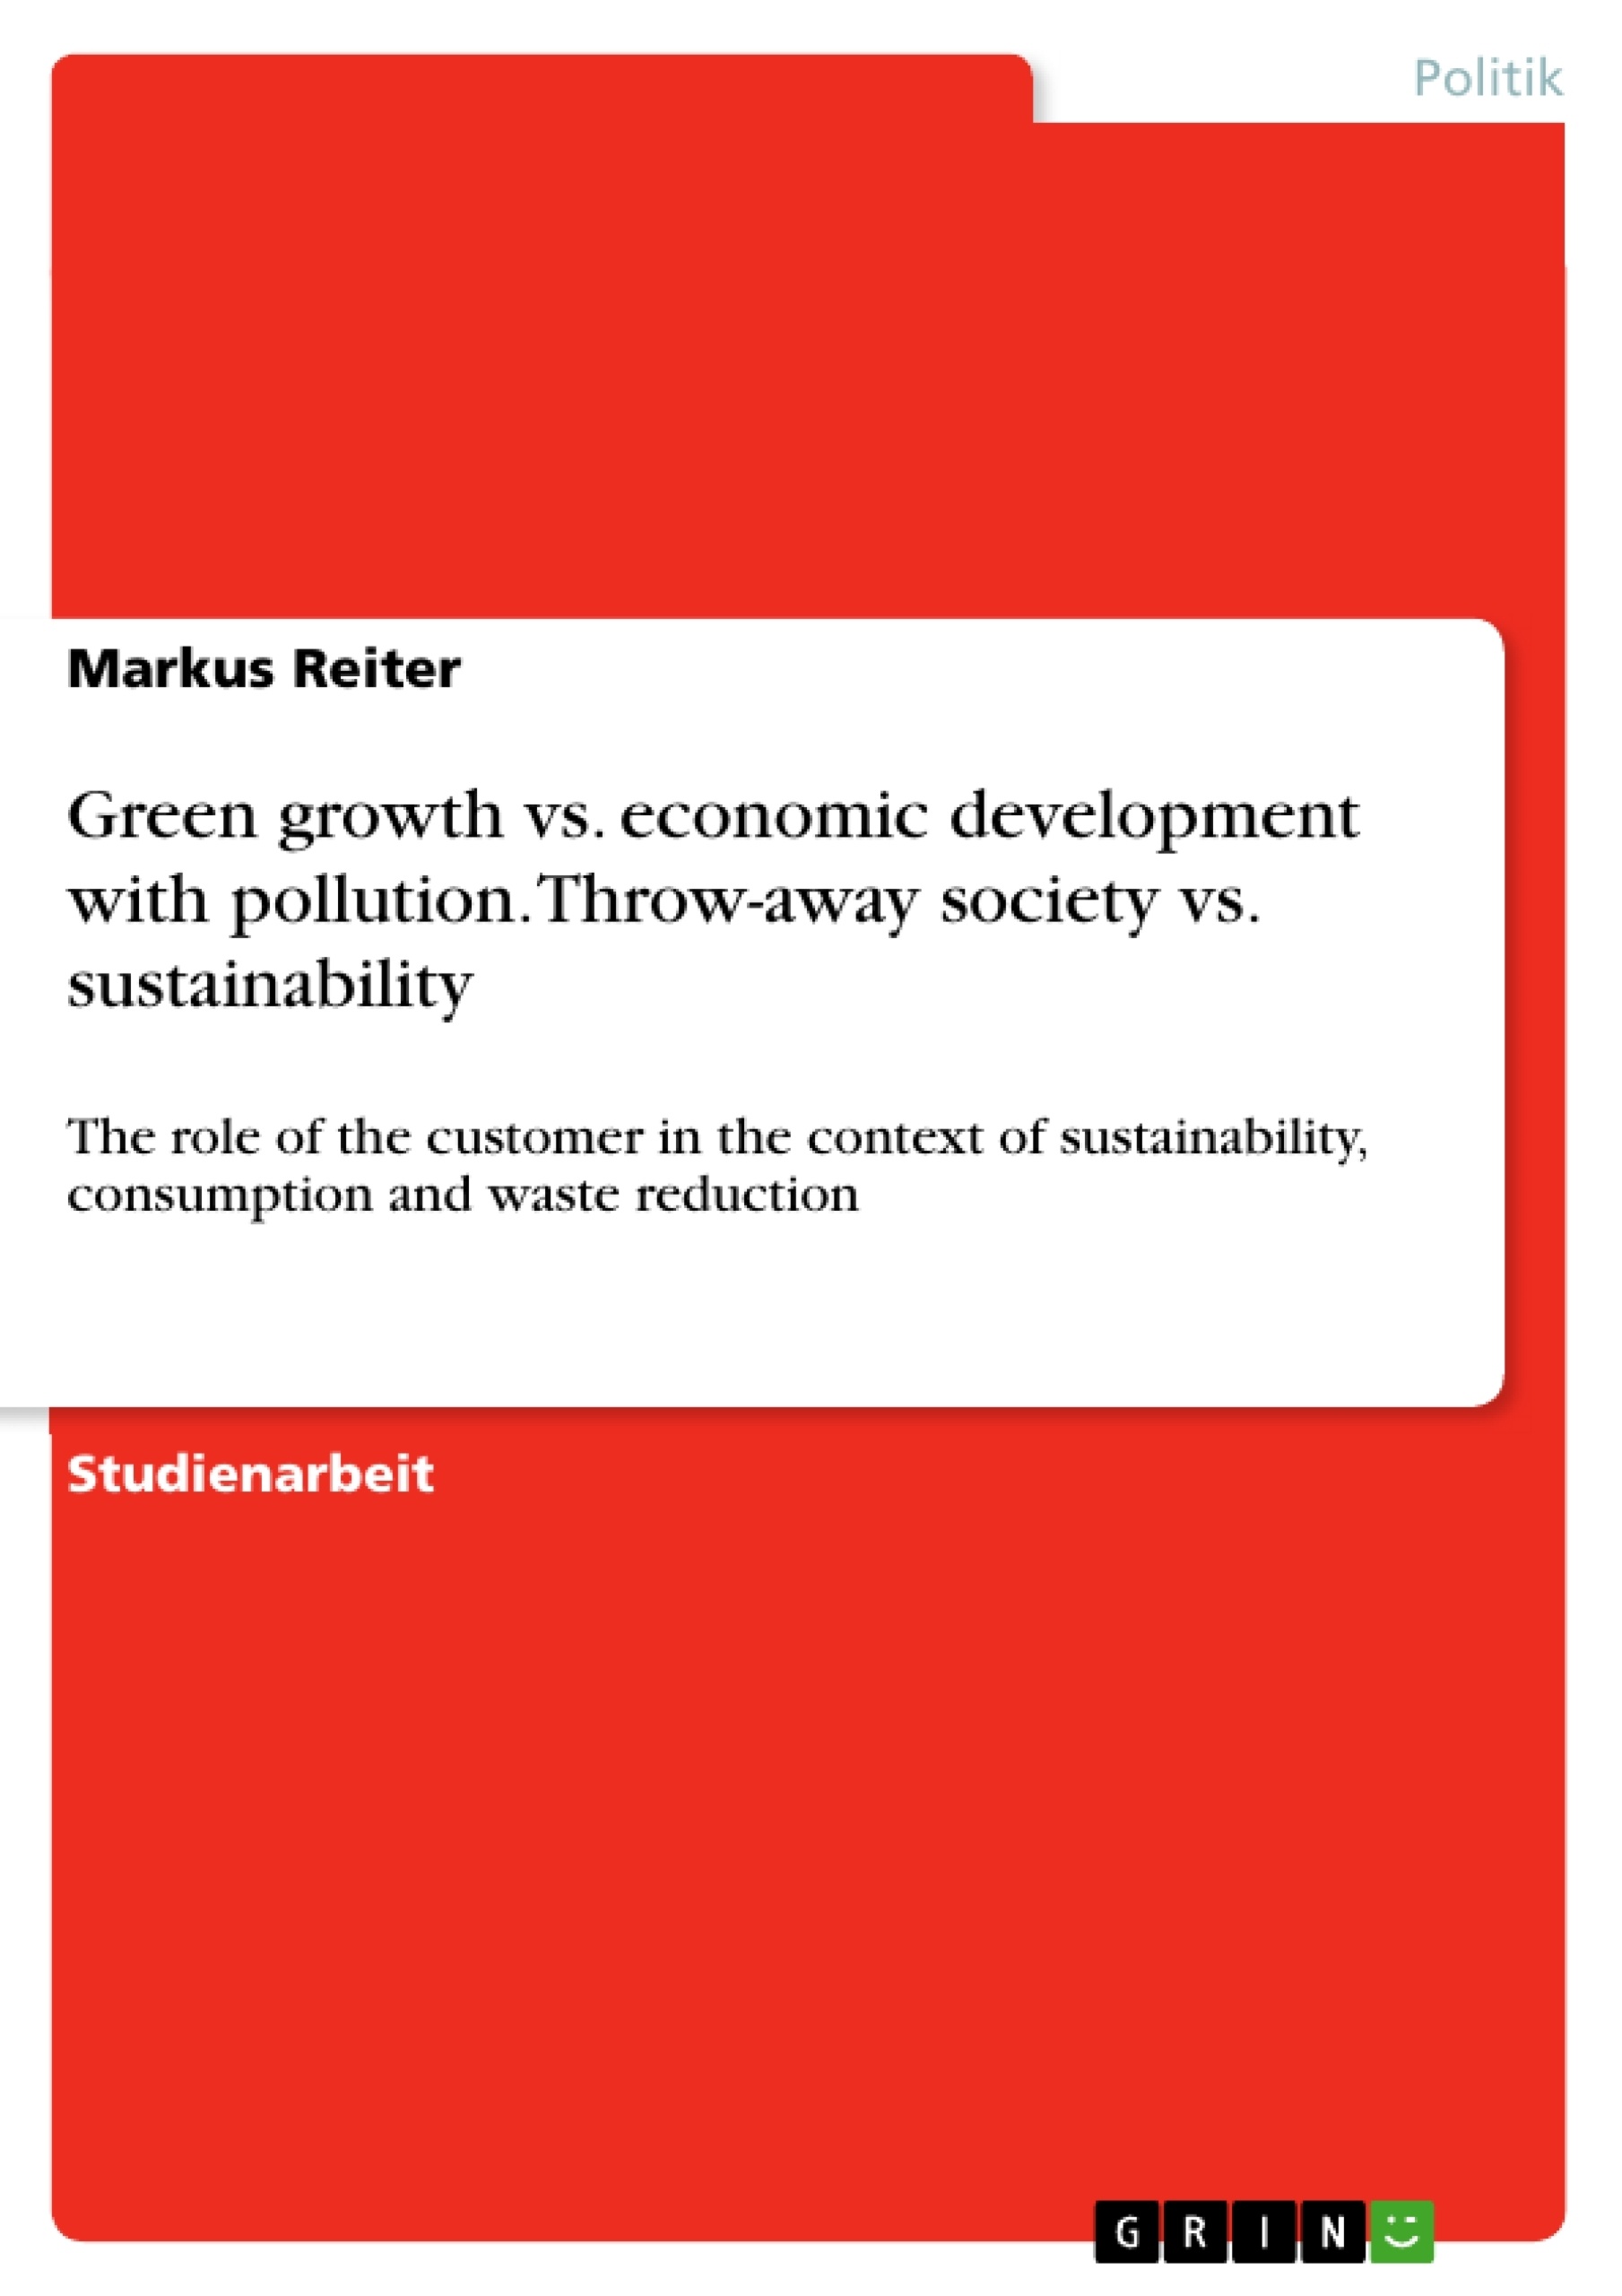 Titel: Green growth vs. economic development with pollution. Throw-away society vs. sustainability